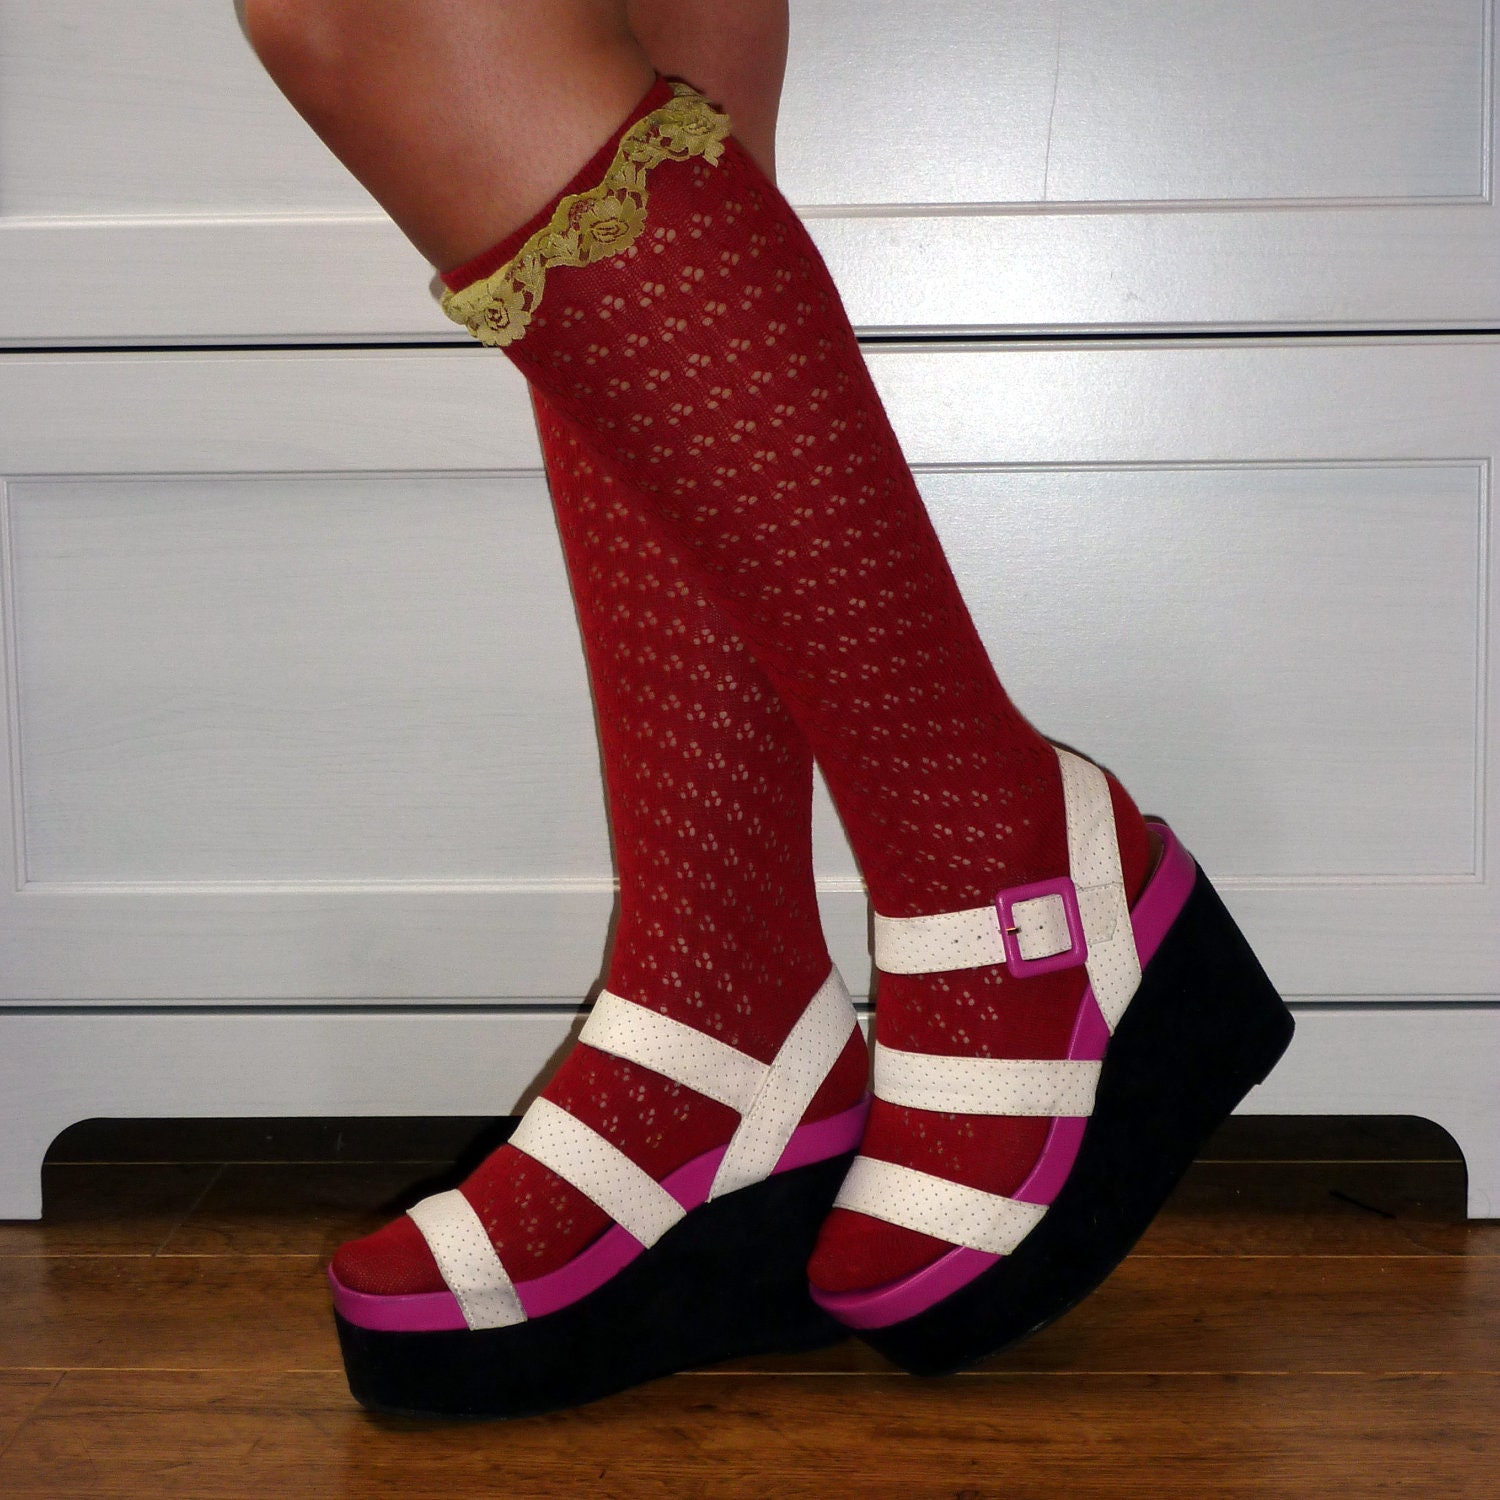 Red Frilly Socks